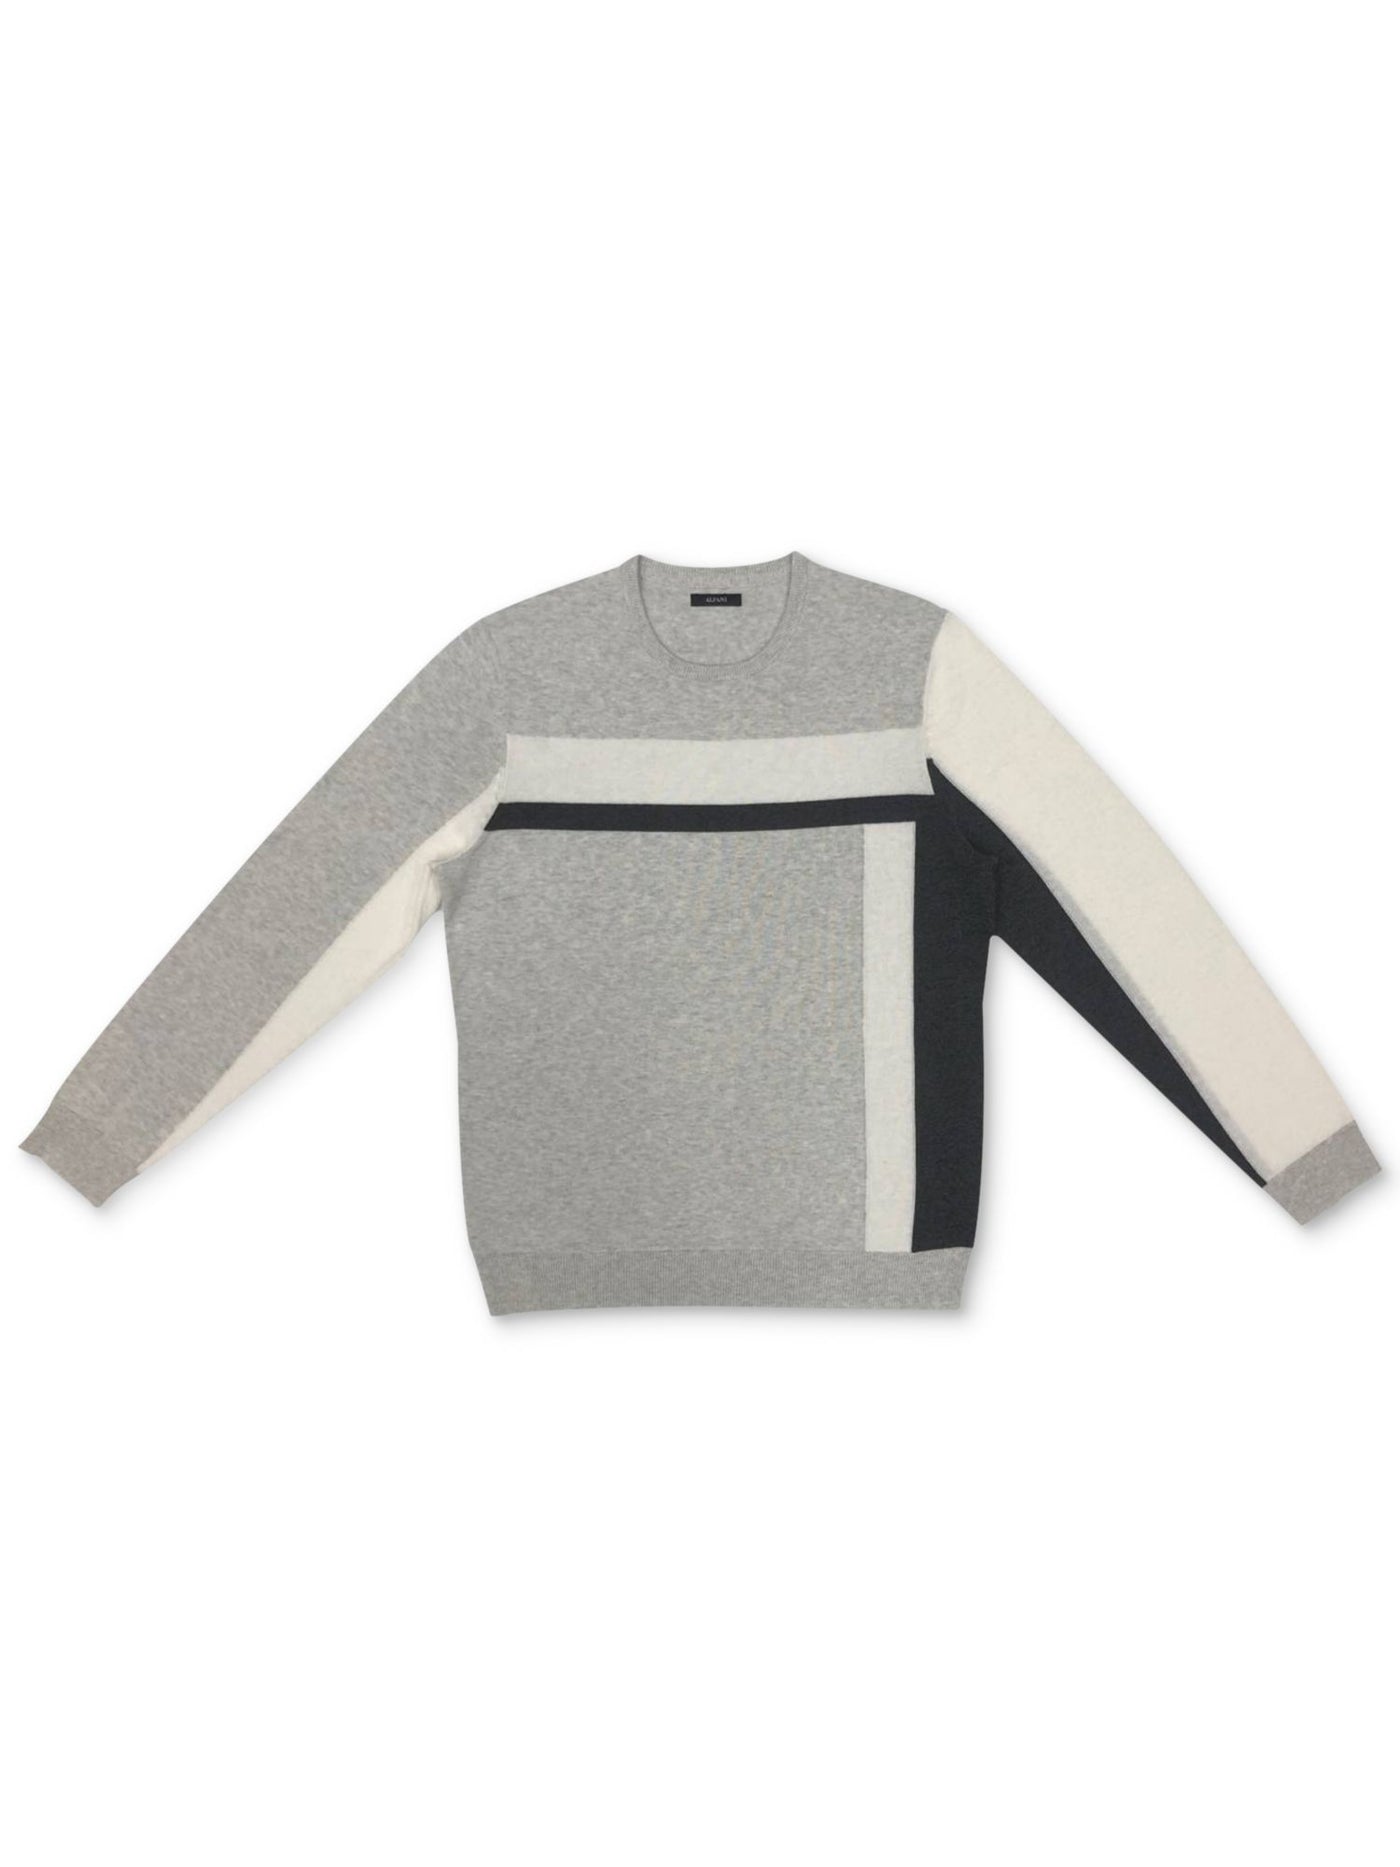 ALFANI Mens Gray Printed Crew Neck Classic Fit Pullover Sweater XL